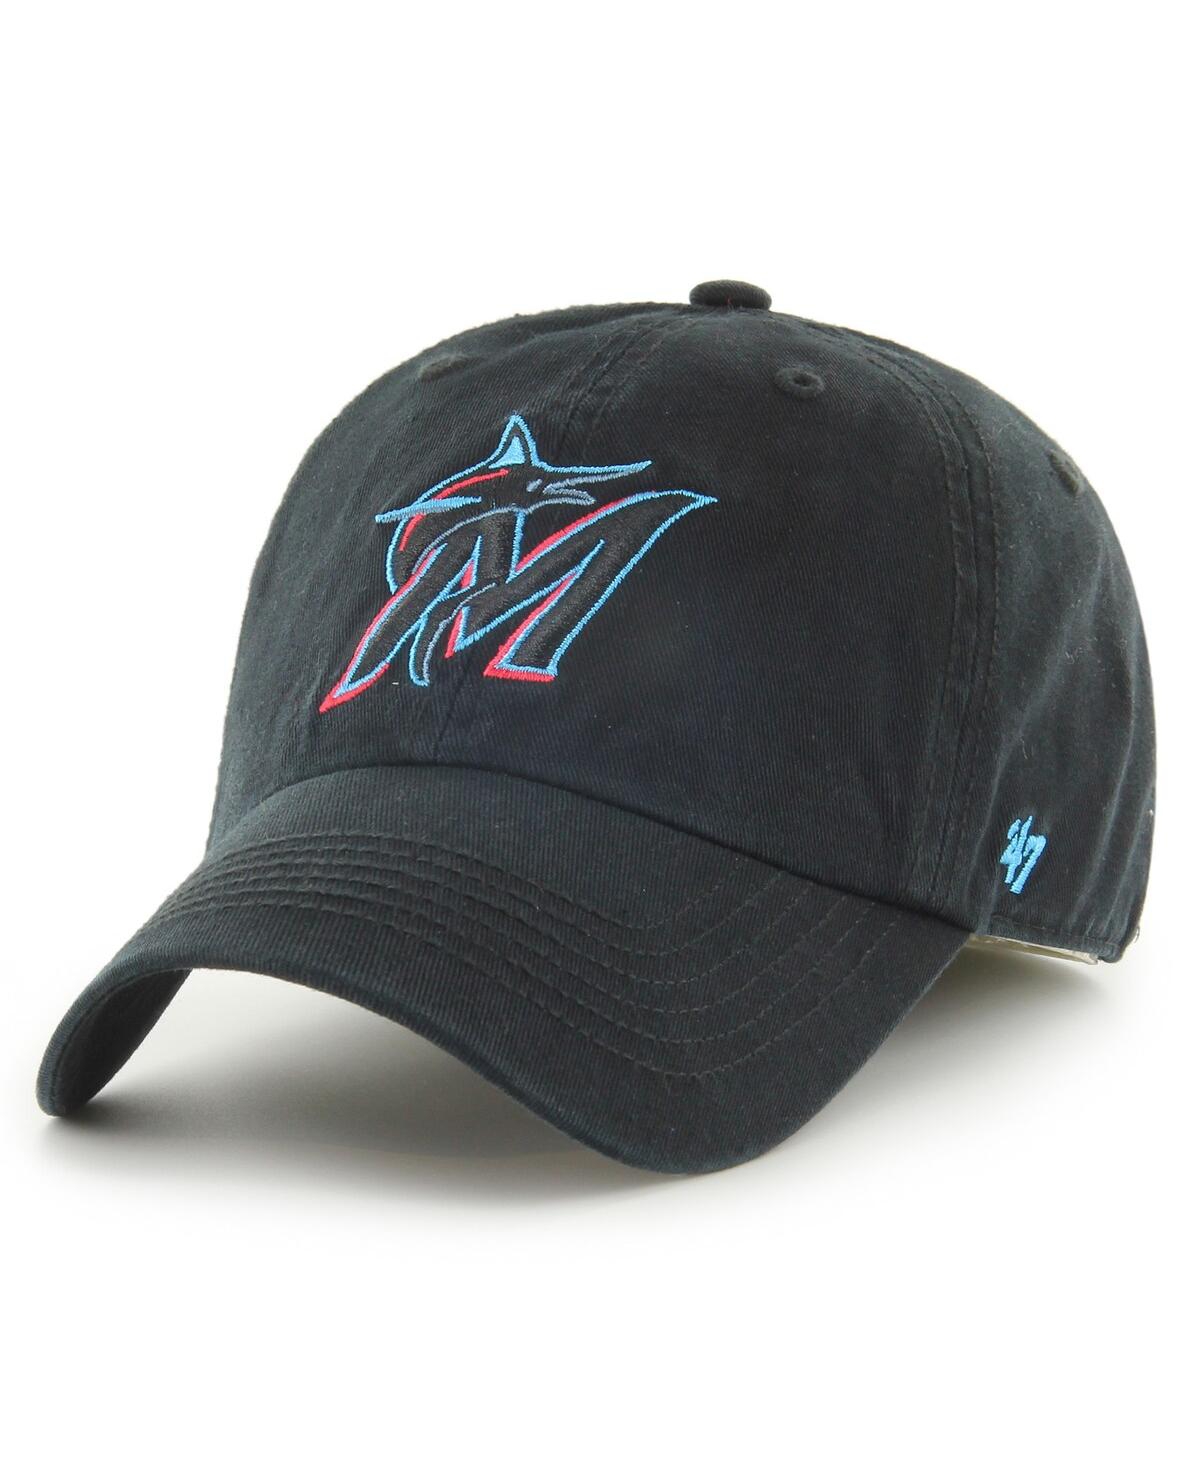 Men's '47 Brand Black Miami Marlins Franchise Logo Fitted Hat - Black